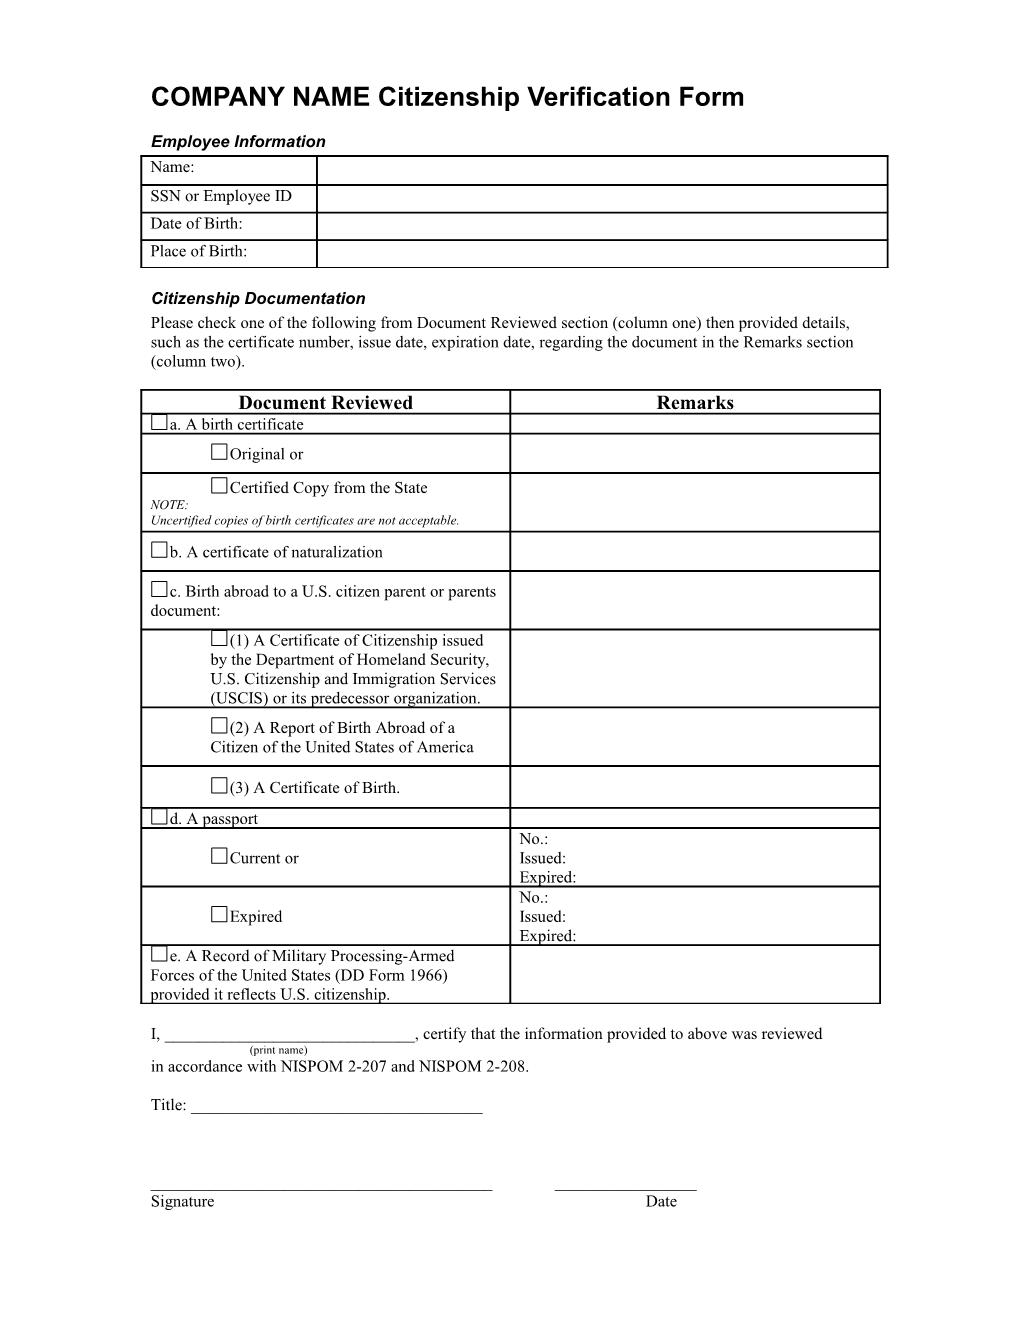 COMPANY NAME Citizenship Verification Form